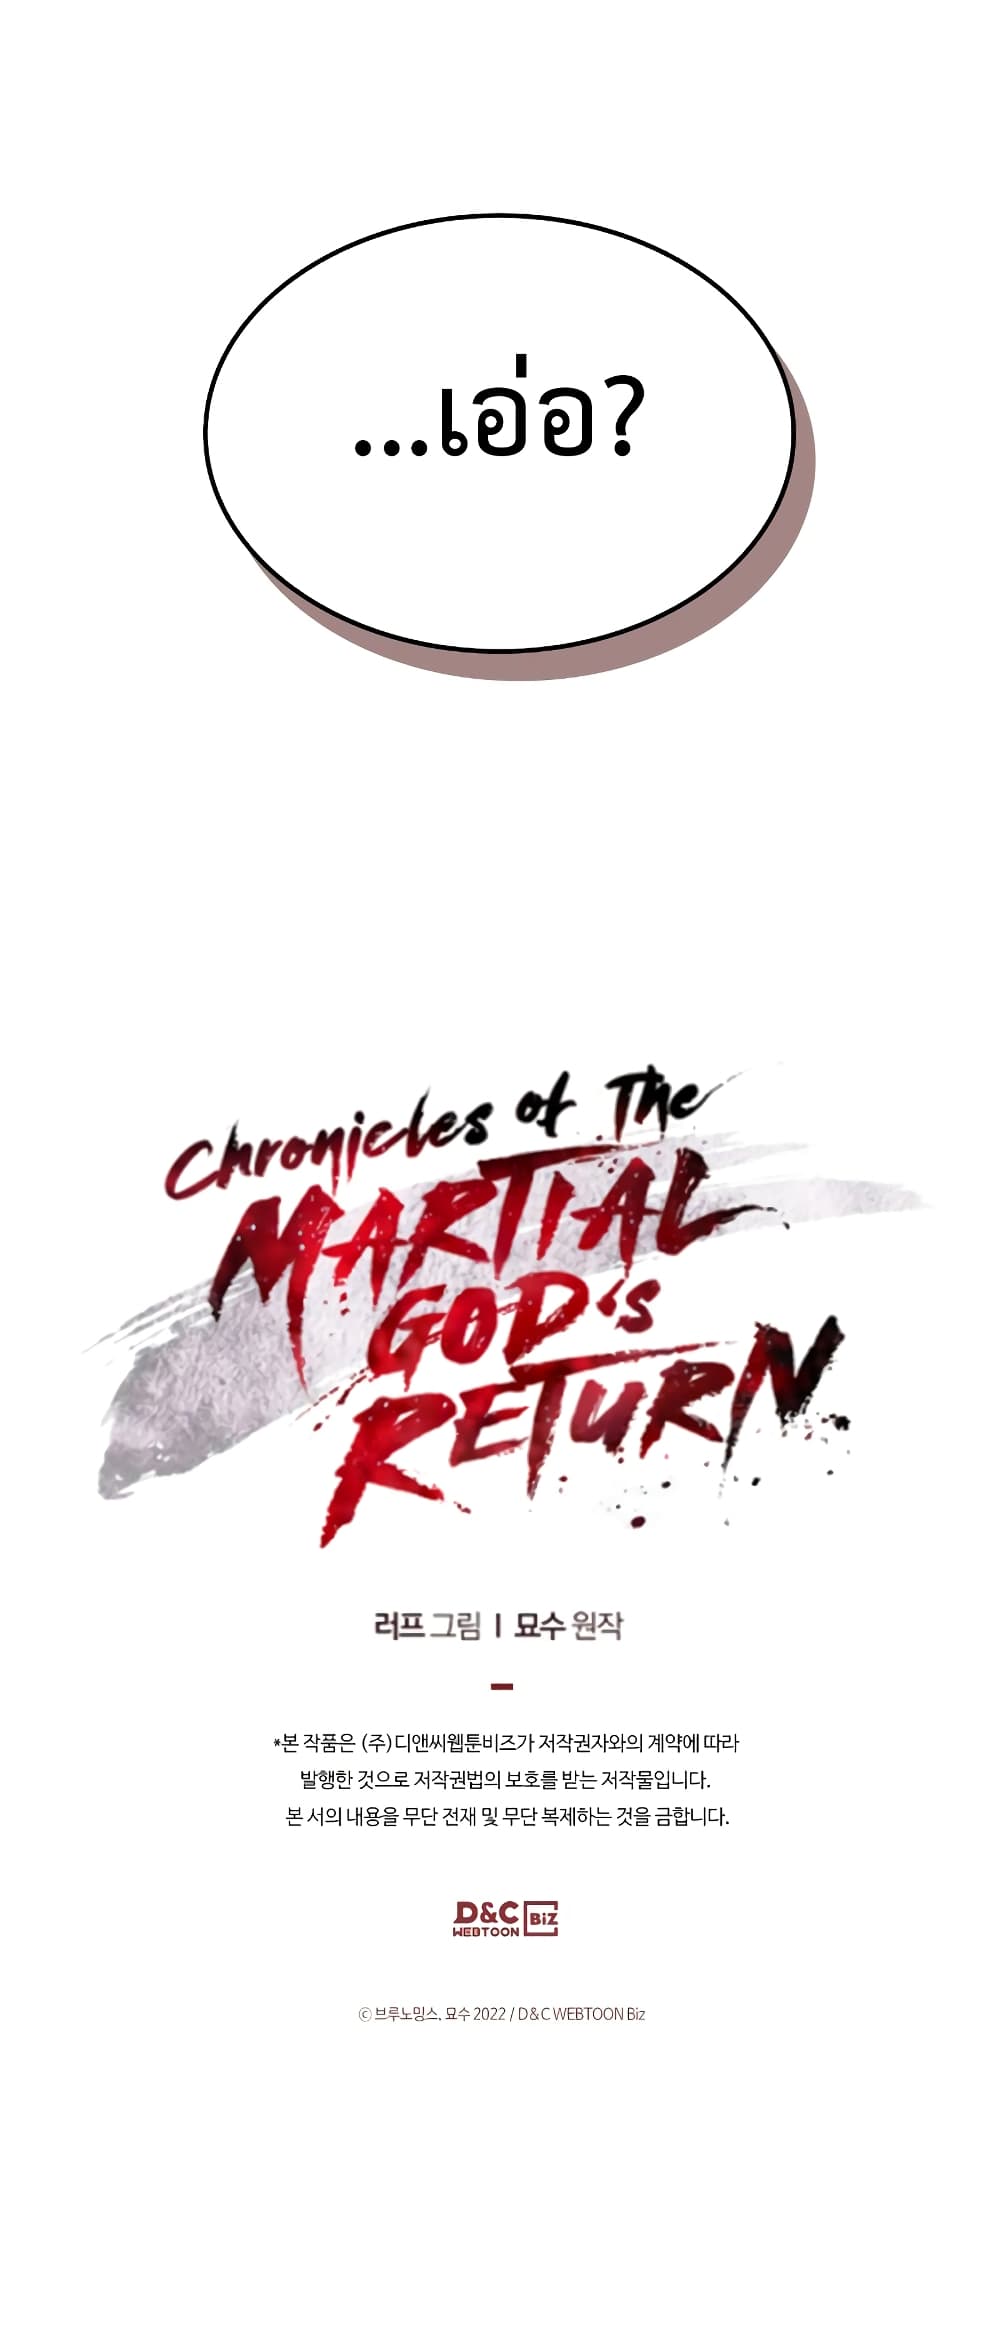 Chronicles Of The Martial God's Return 56-56